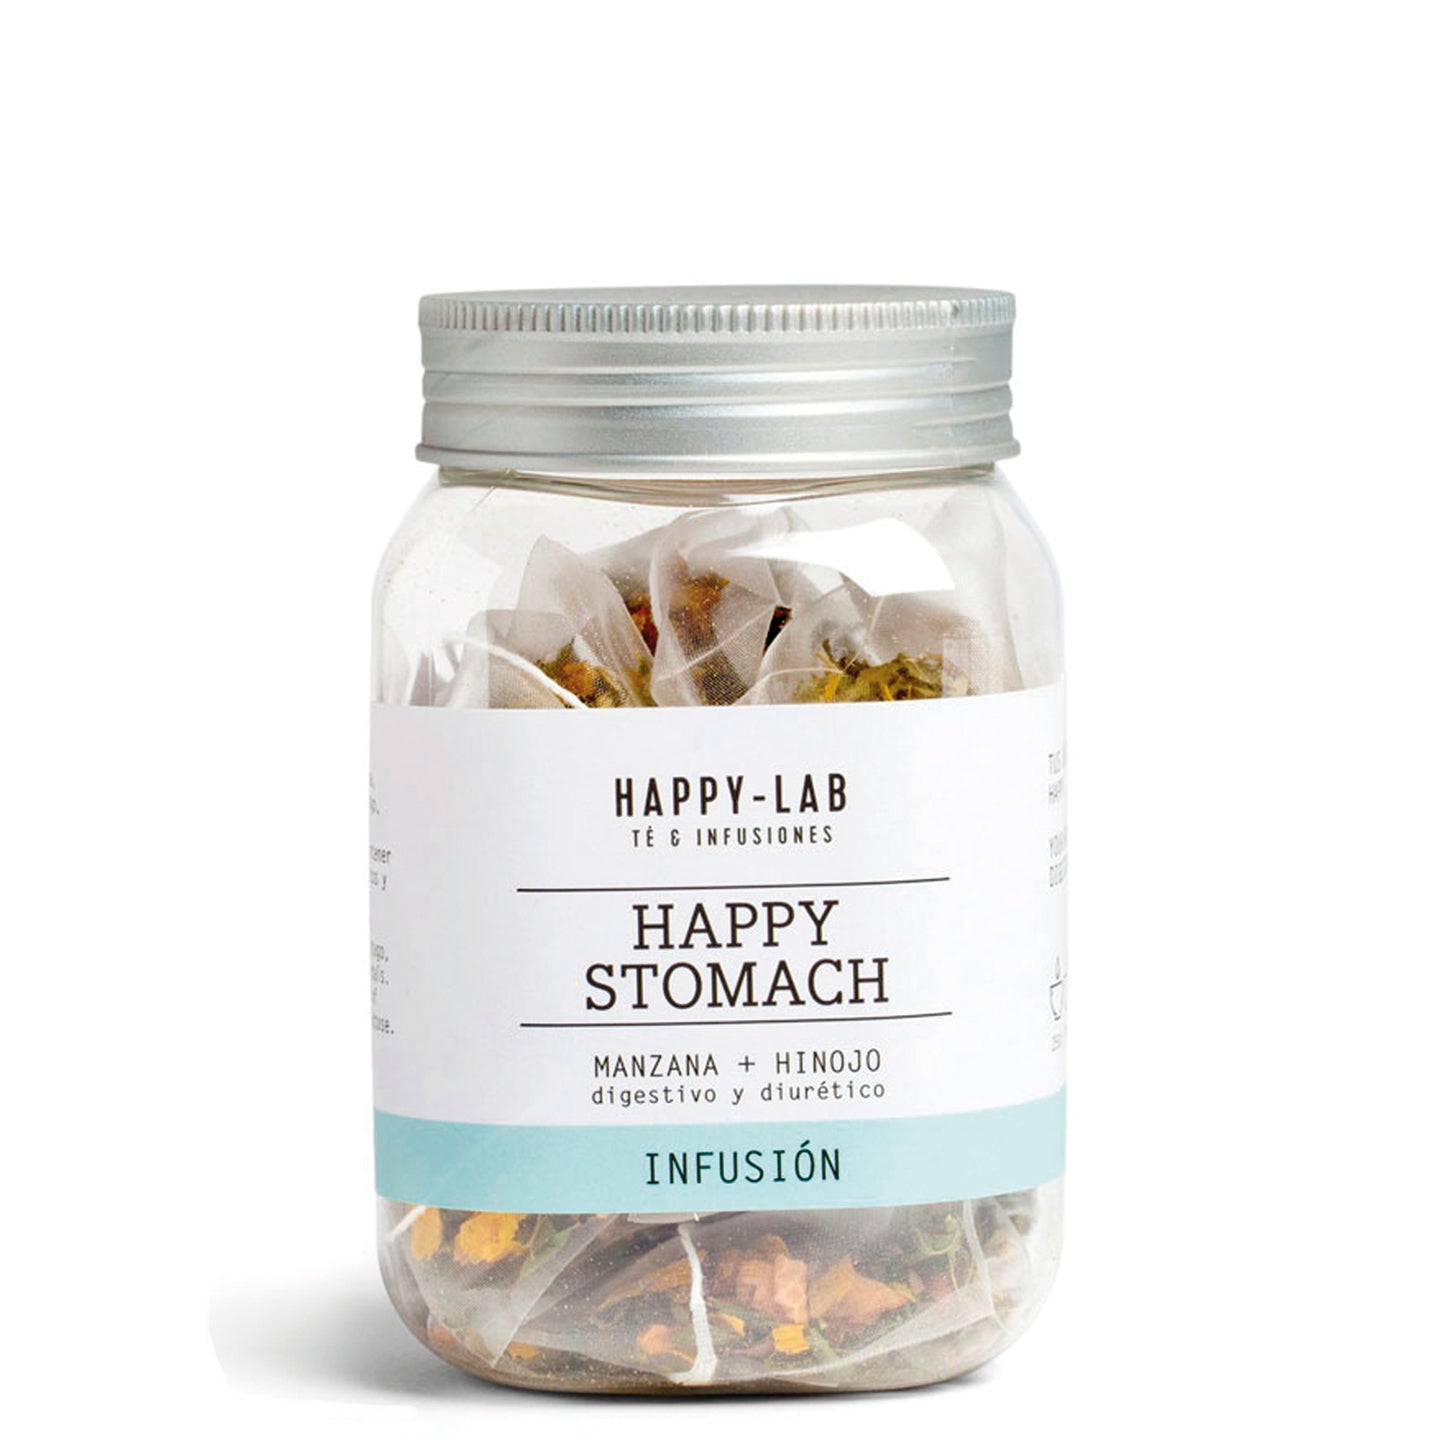 HAPPY STOMACH – Happy-Lab